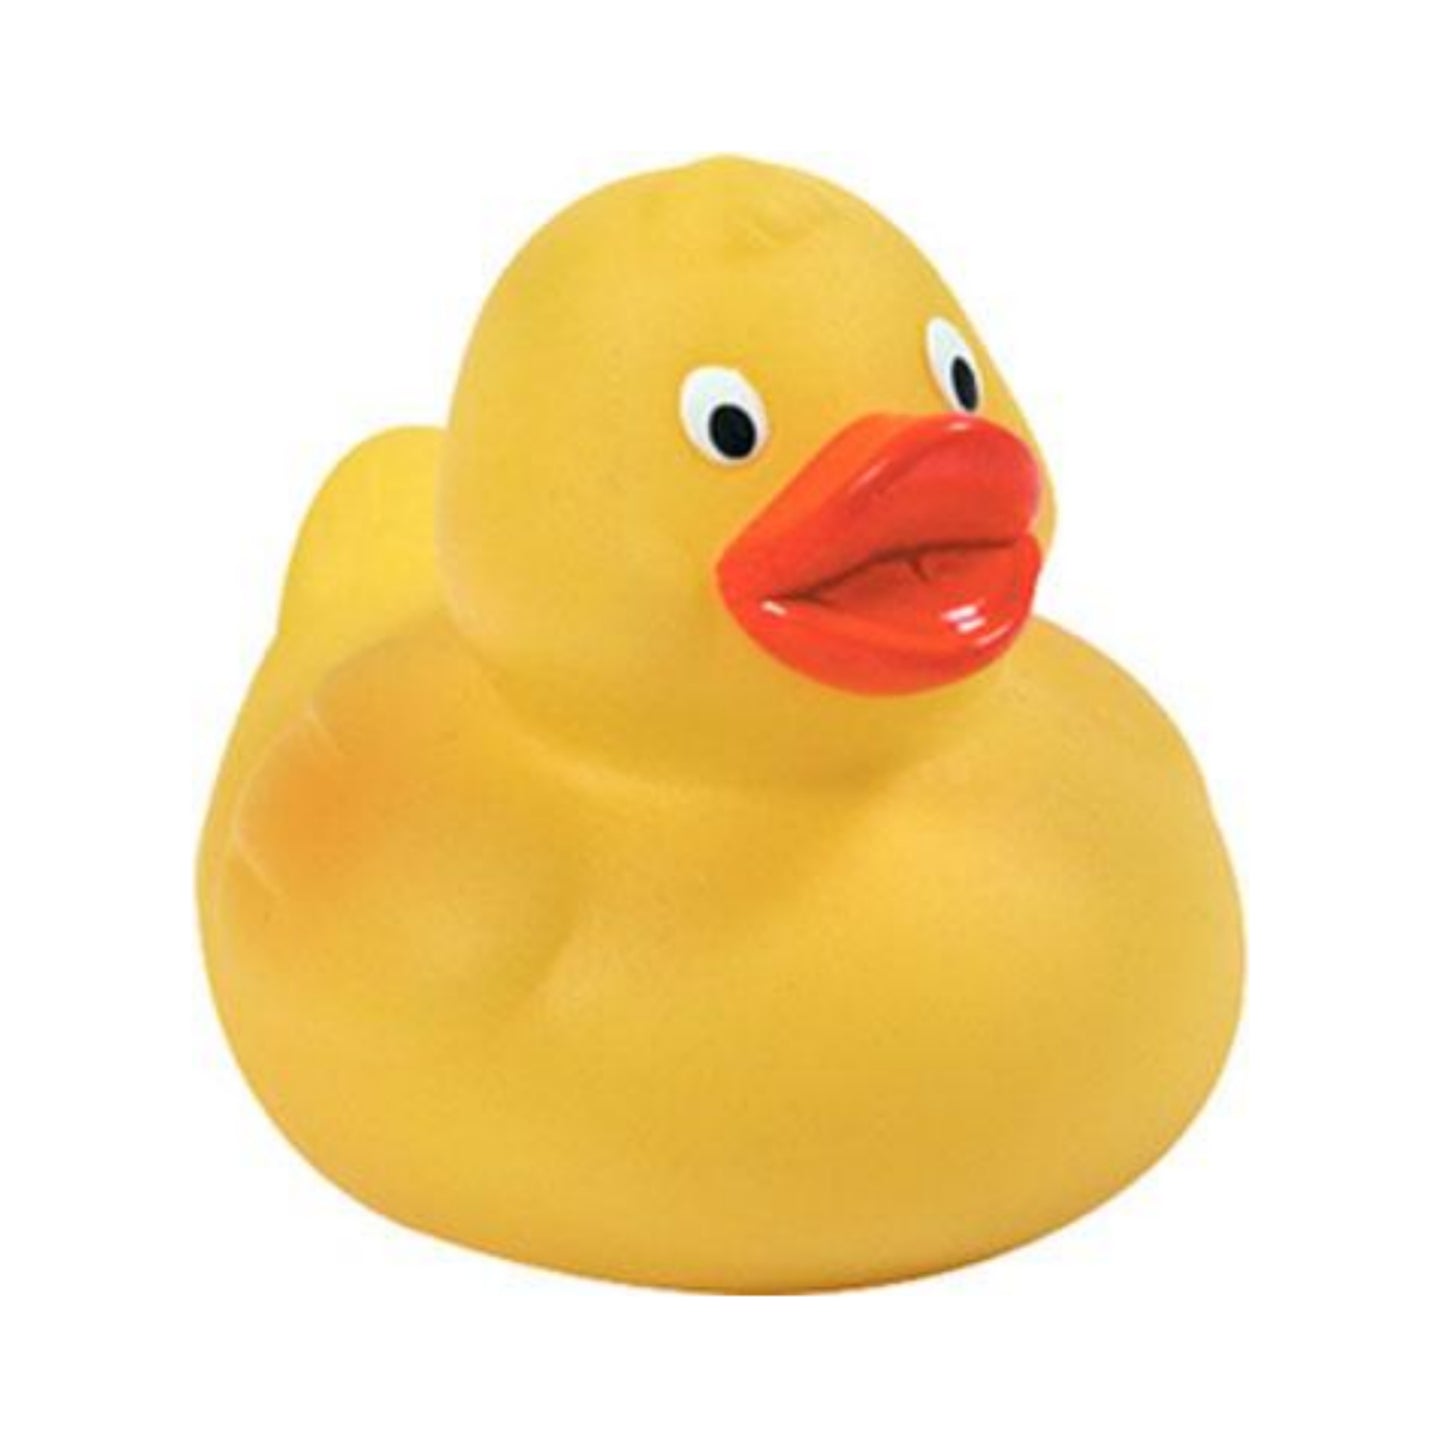 3" Classic Rubber Ducky